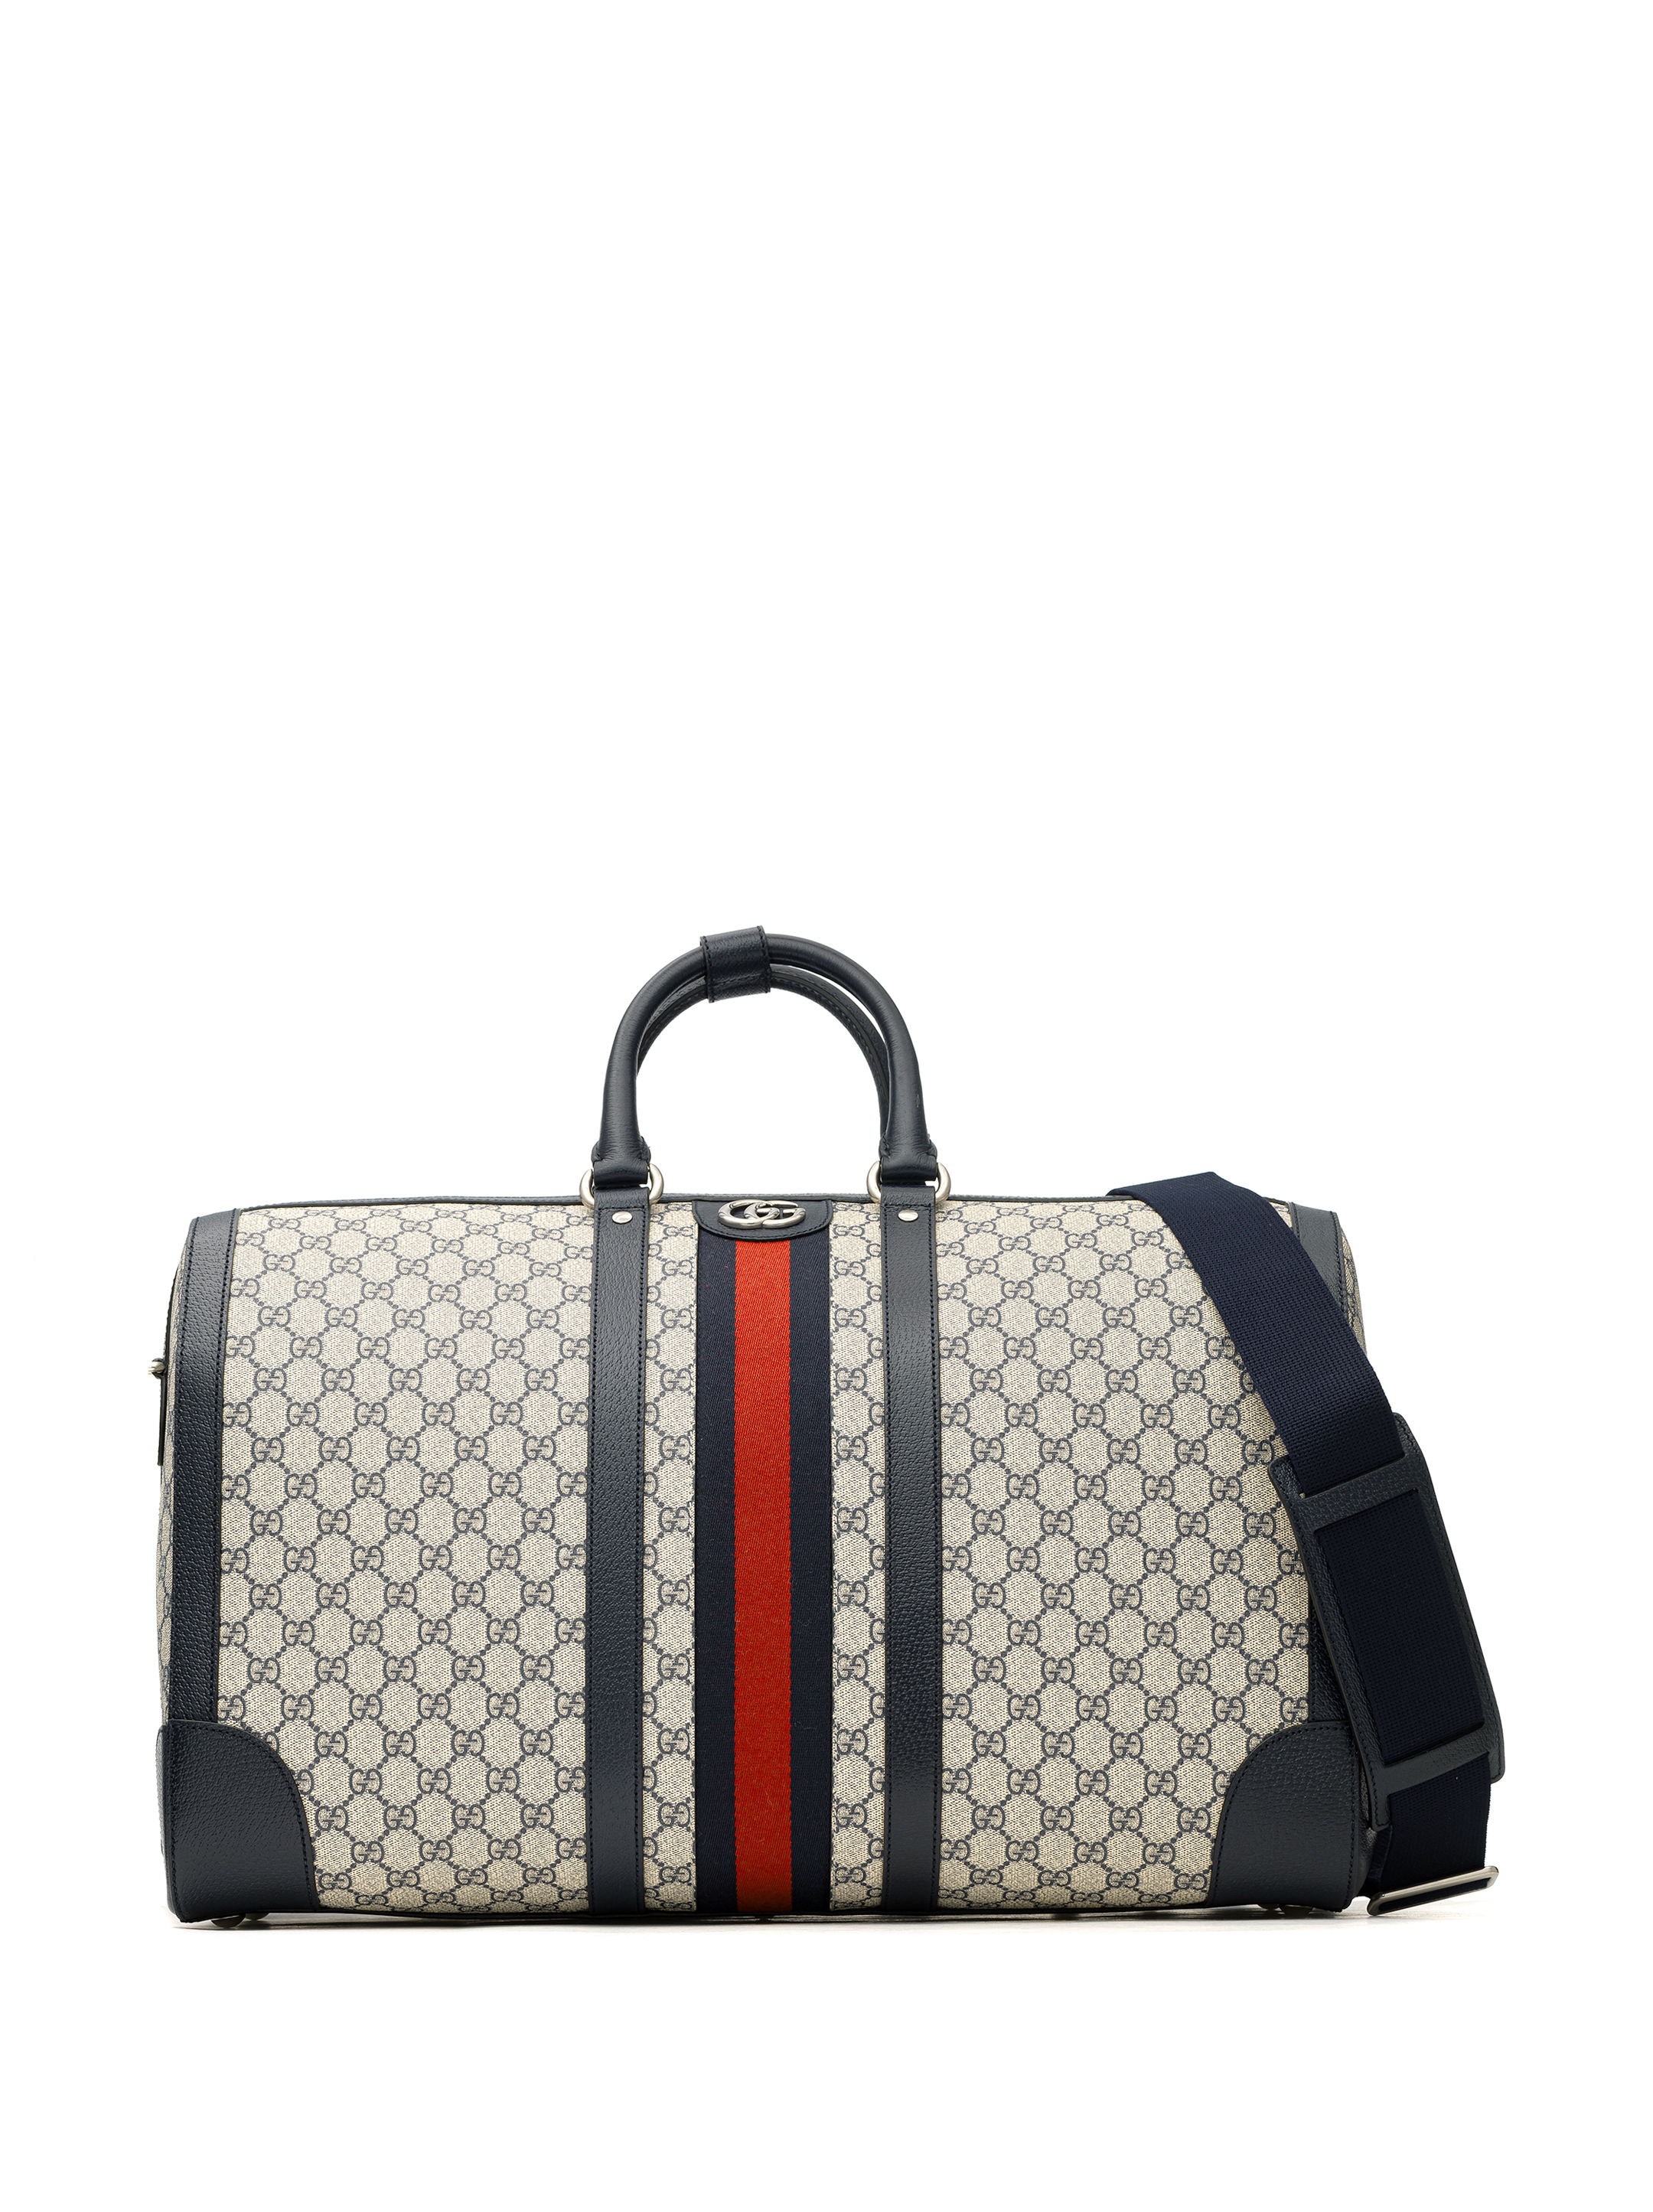 Gucci Travel Bag - Etsy